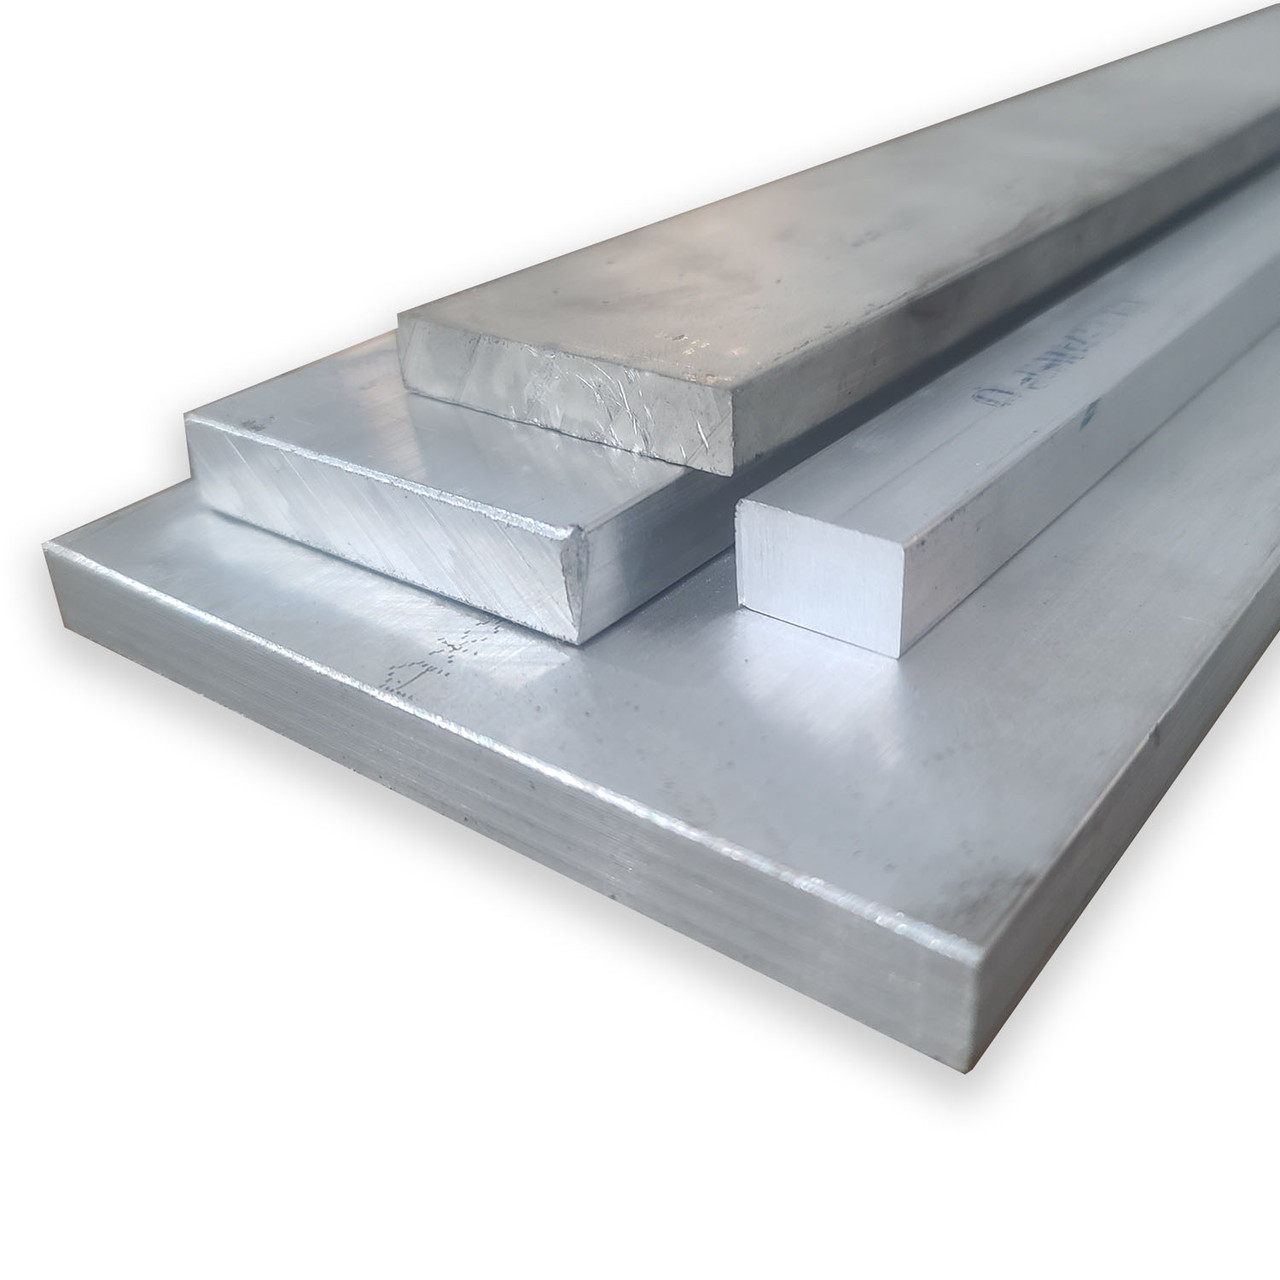 2" x 2.25" x 10", 6061-T6511 Aluminum Flat Bar